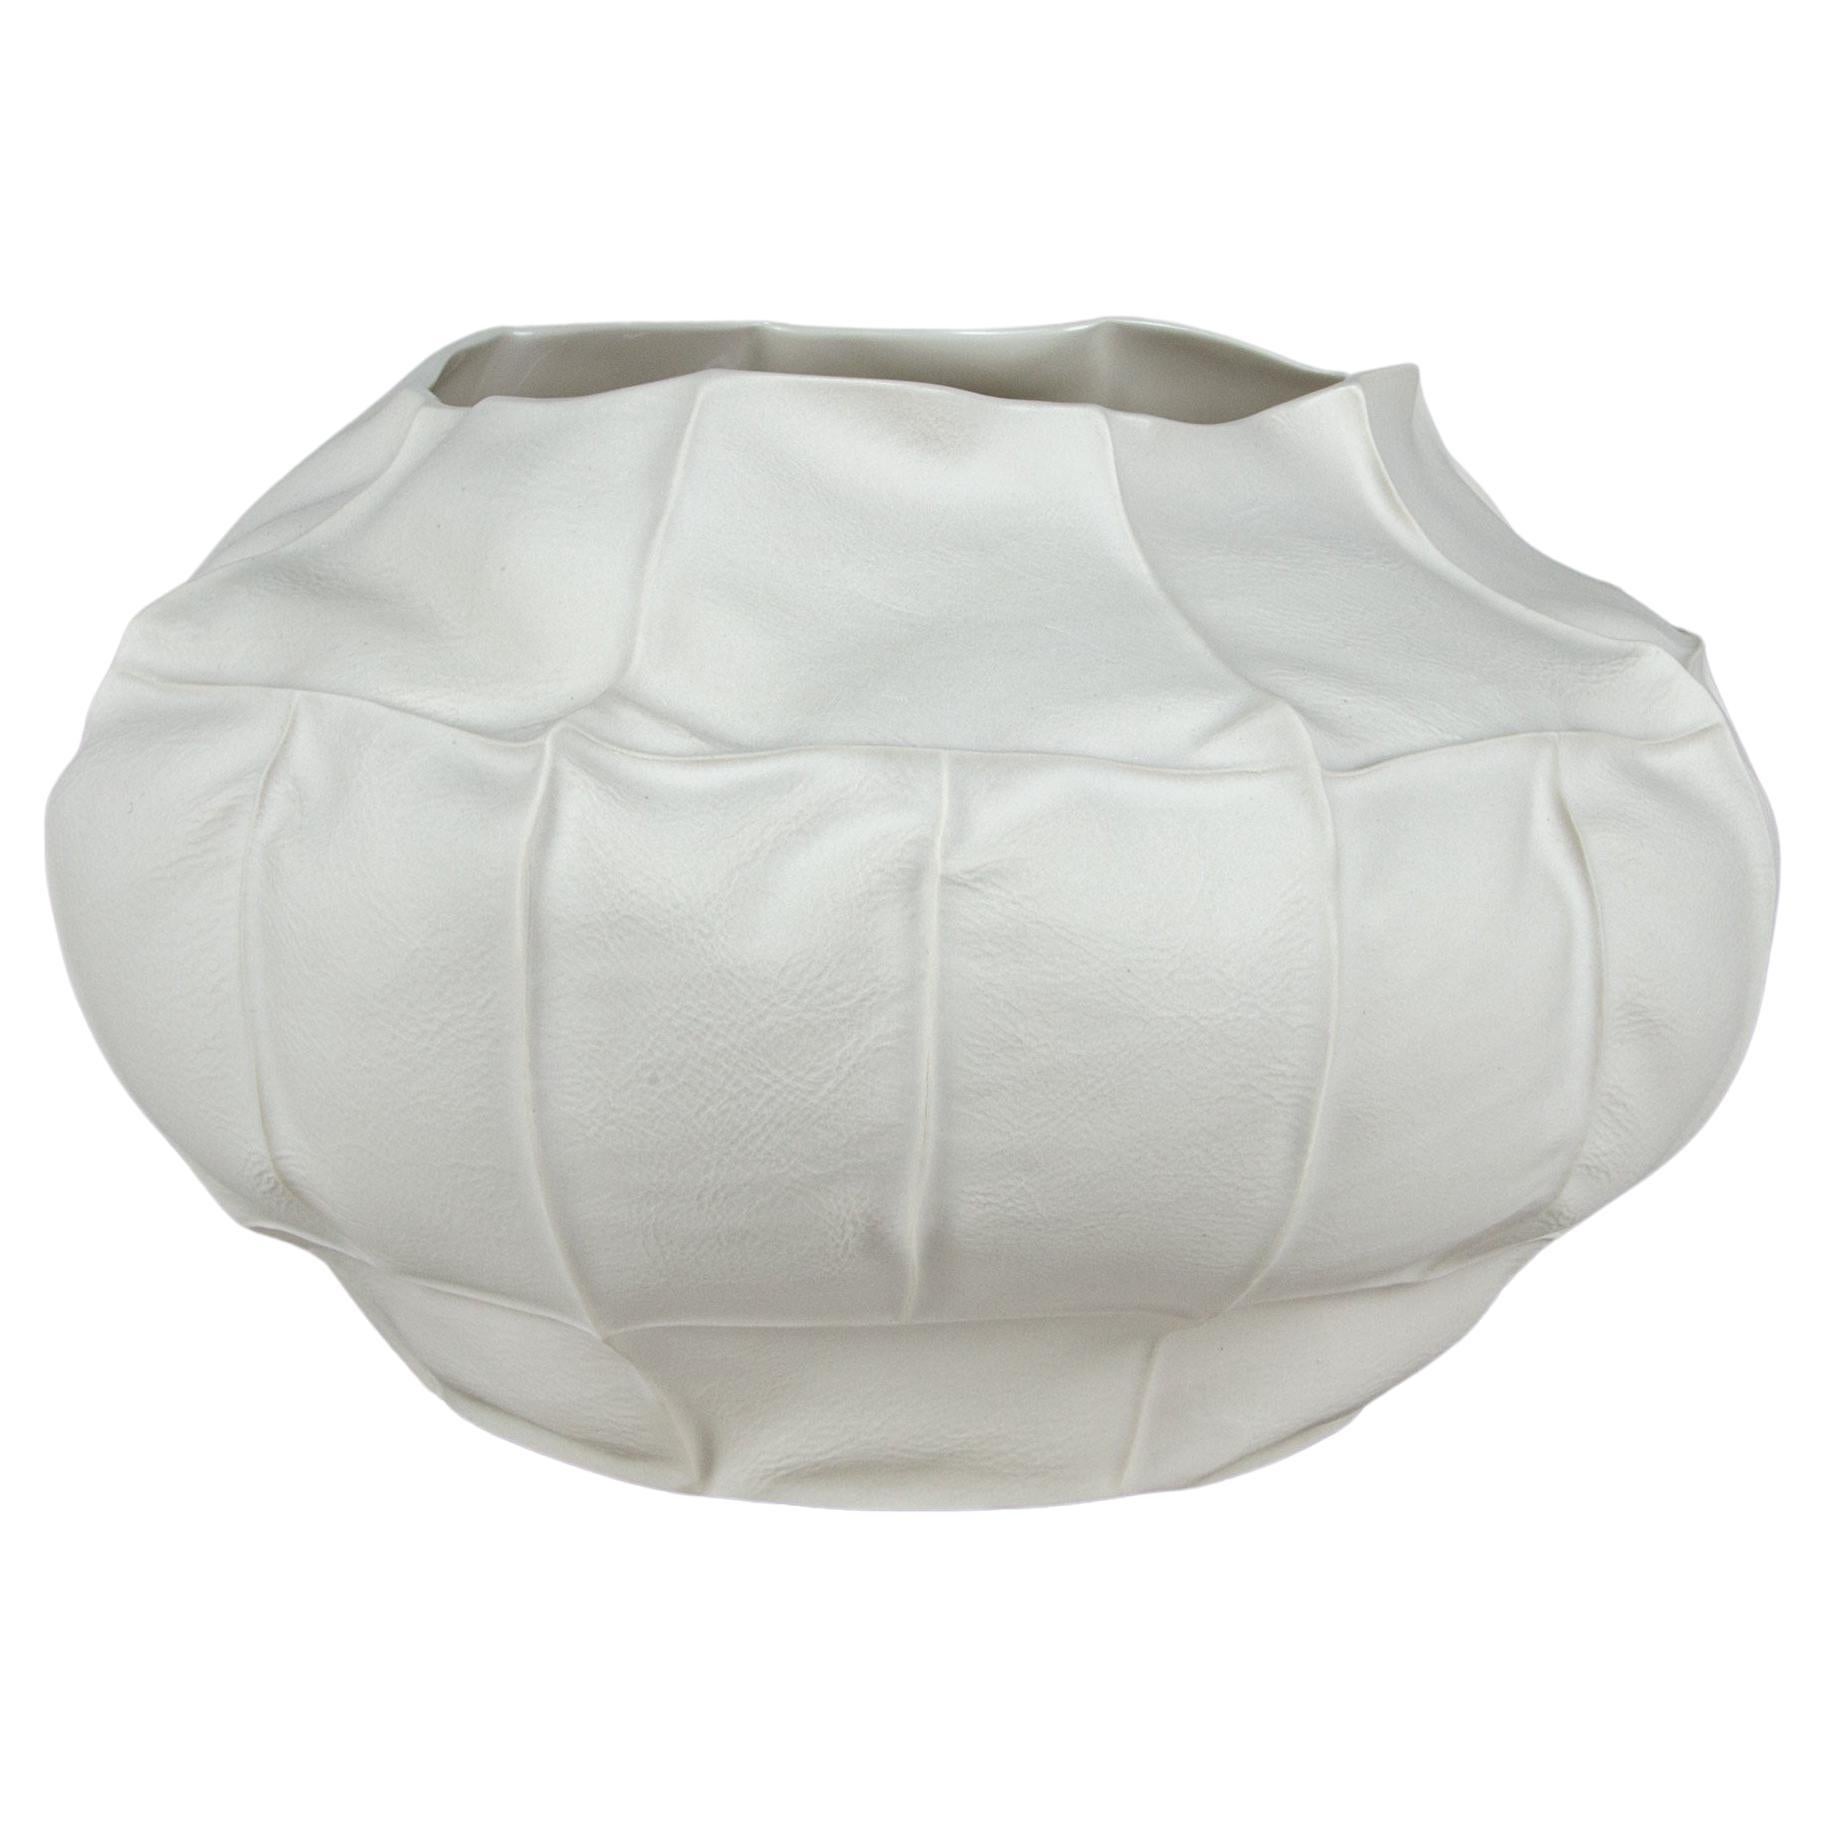 Organic White Ceramic Kawa Vessel, Large 01, Leather Cast Porcelain Vase For Sale